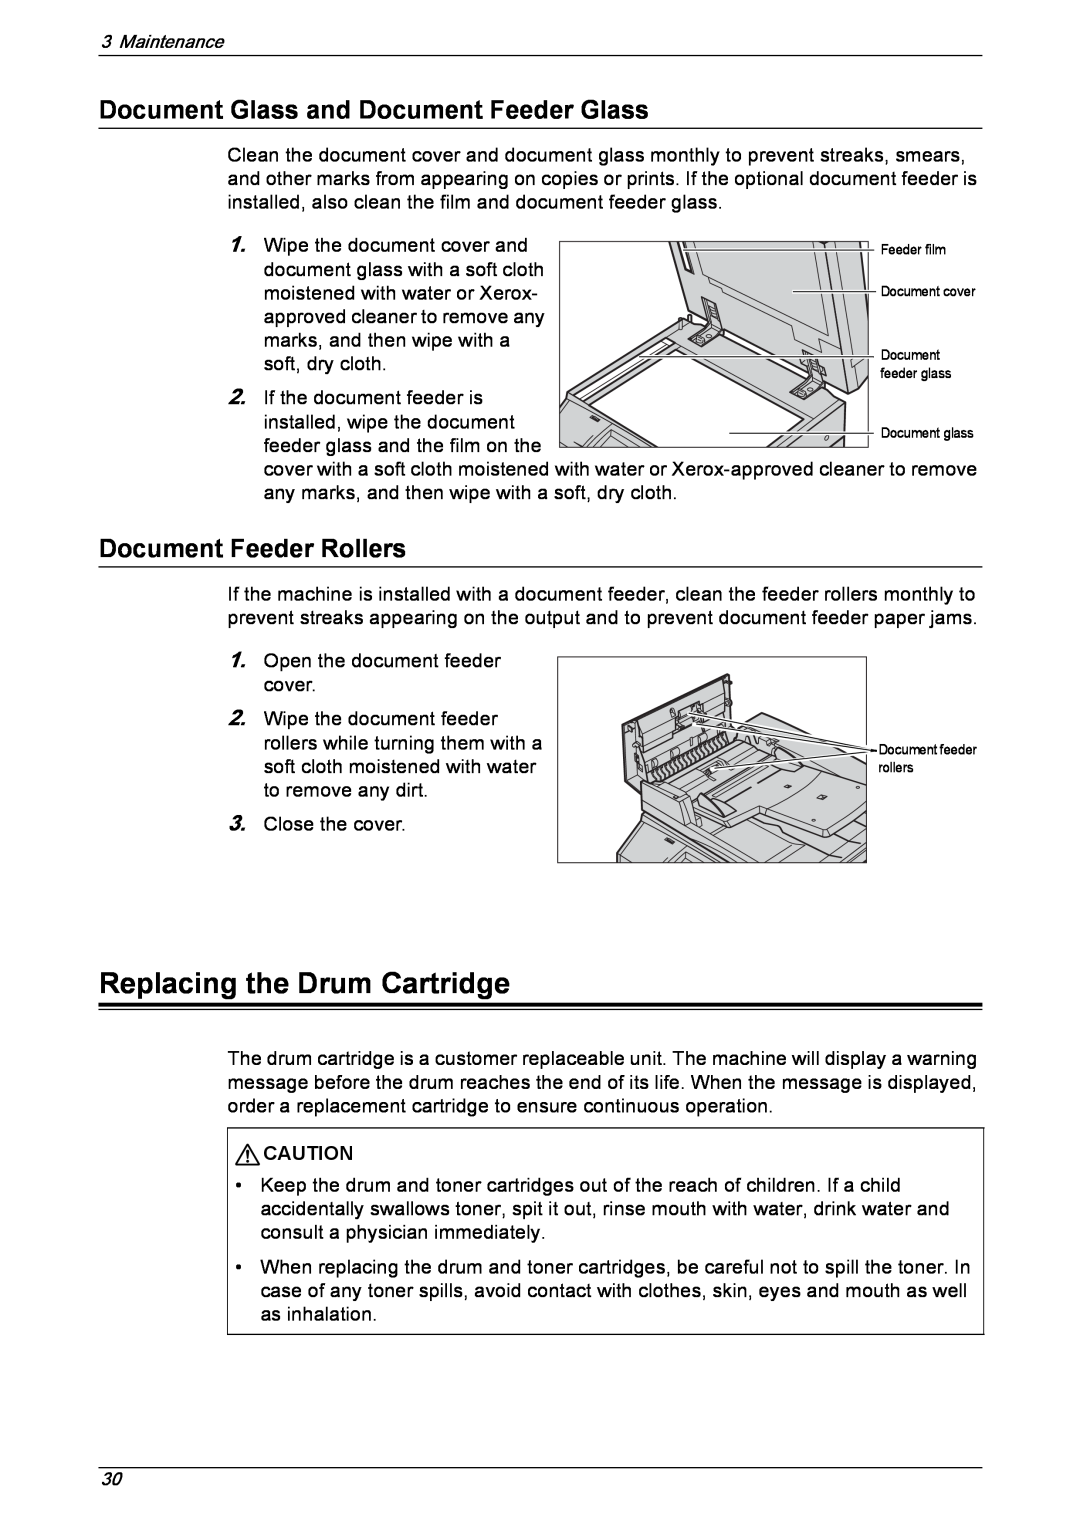 Xerox 5222 manual Replacing the Drum Cartridge, Document Glass and Document Feeder Glass, Document Feeder Rollers 